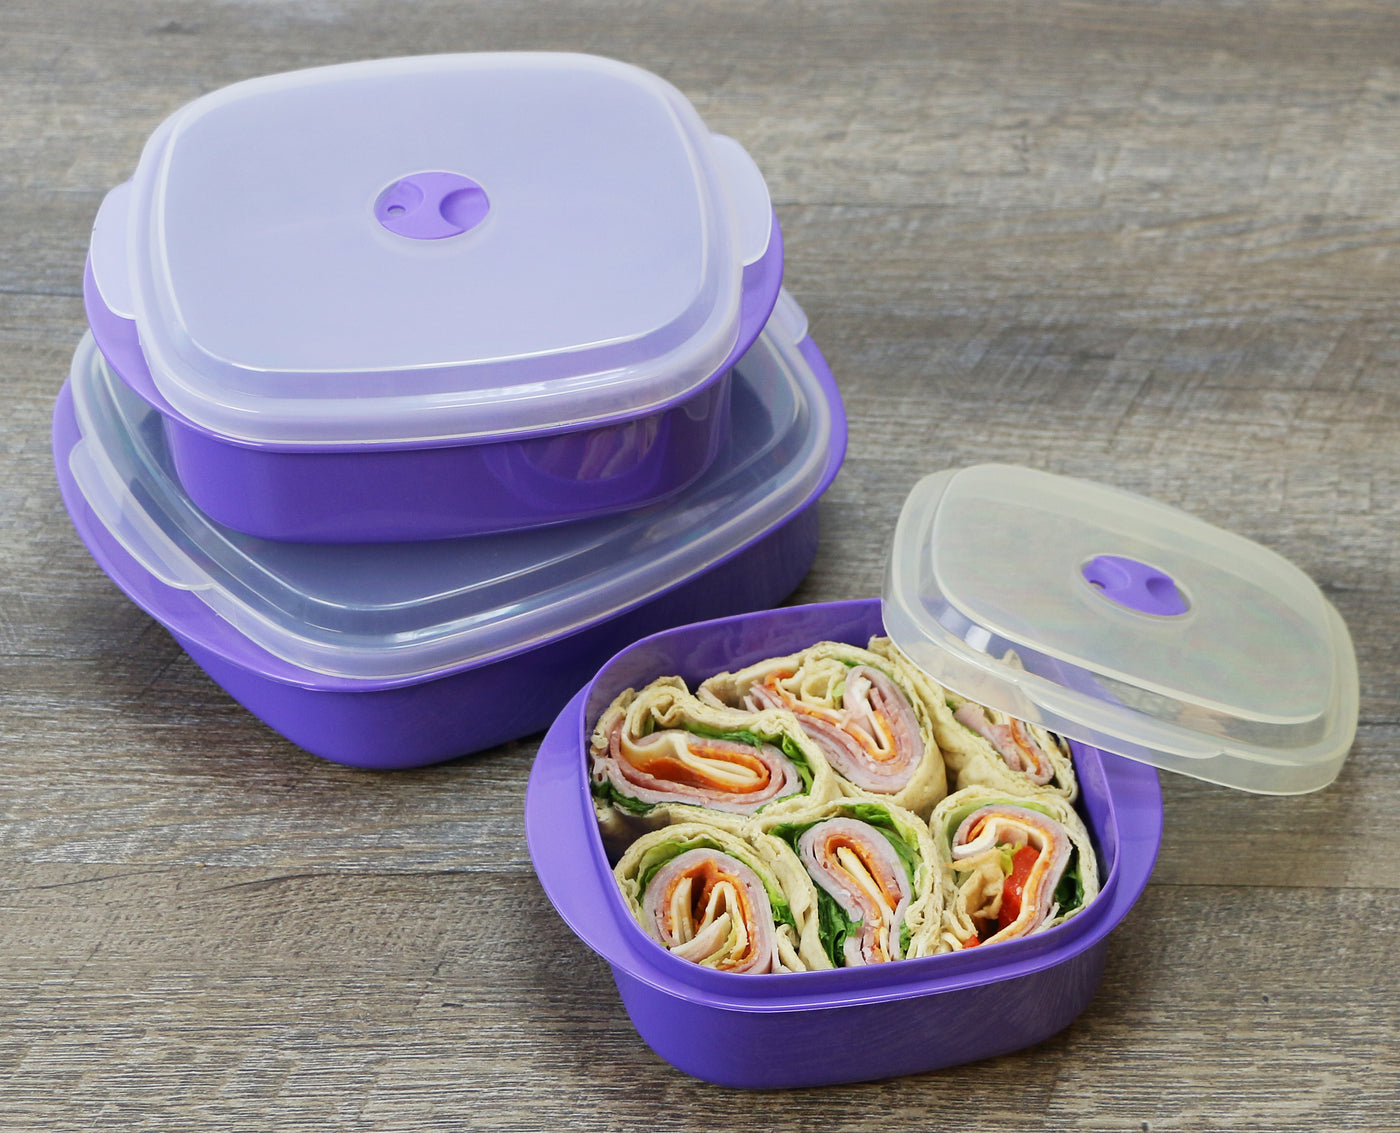 Calypso Basics, Microwave Cookware/ Storage Set, Pink